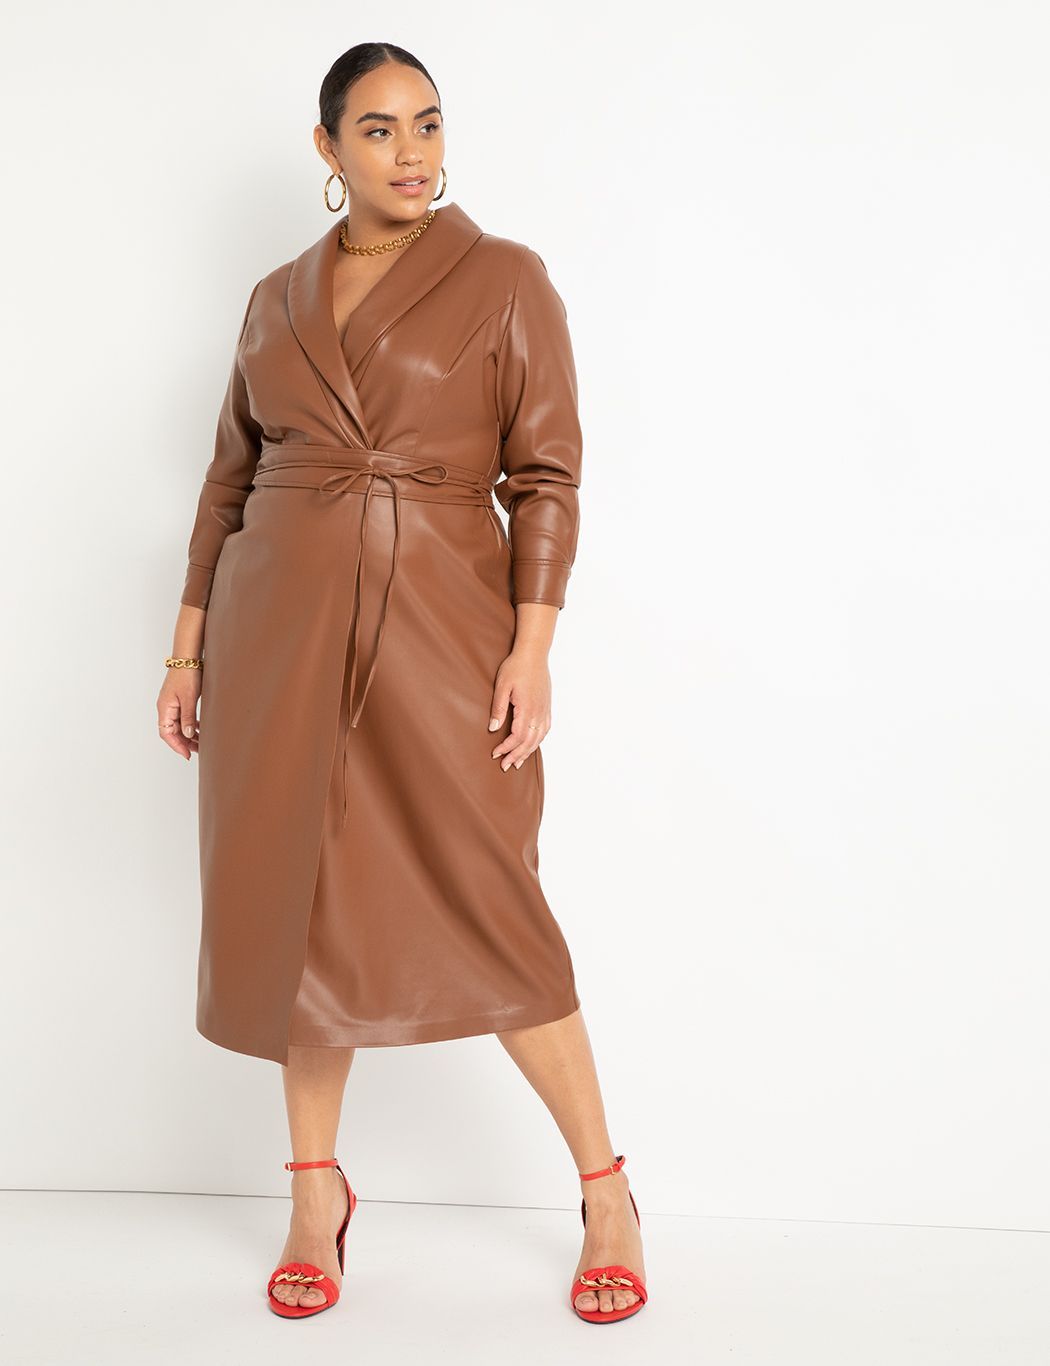 Shawl Collar Faux Leather Dress | Women's Plus Size Dresses | ELOQUII | Eloquii